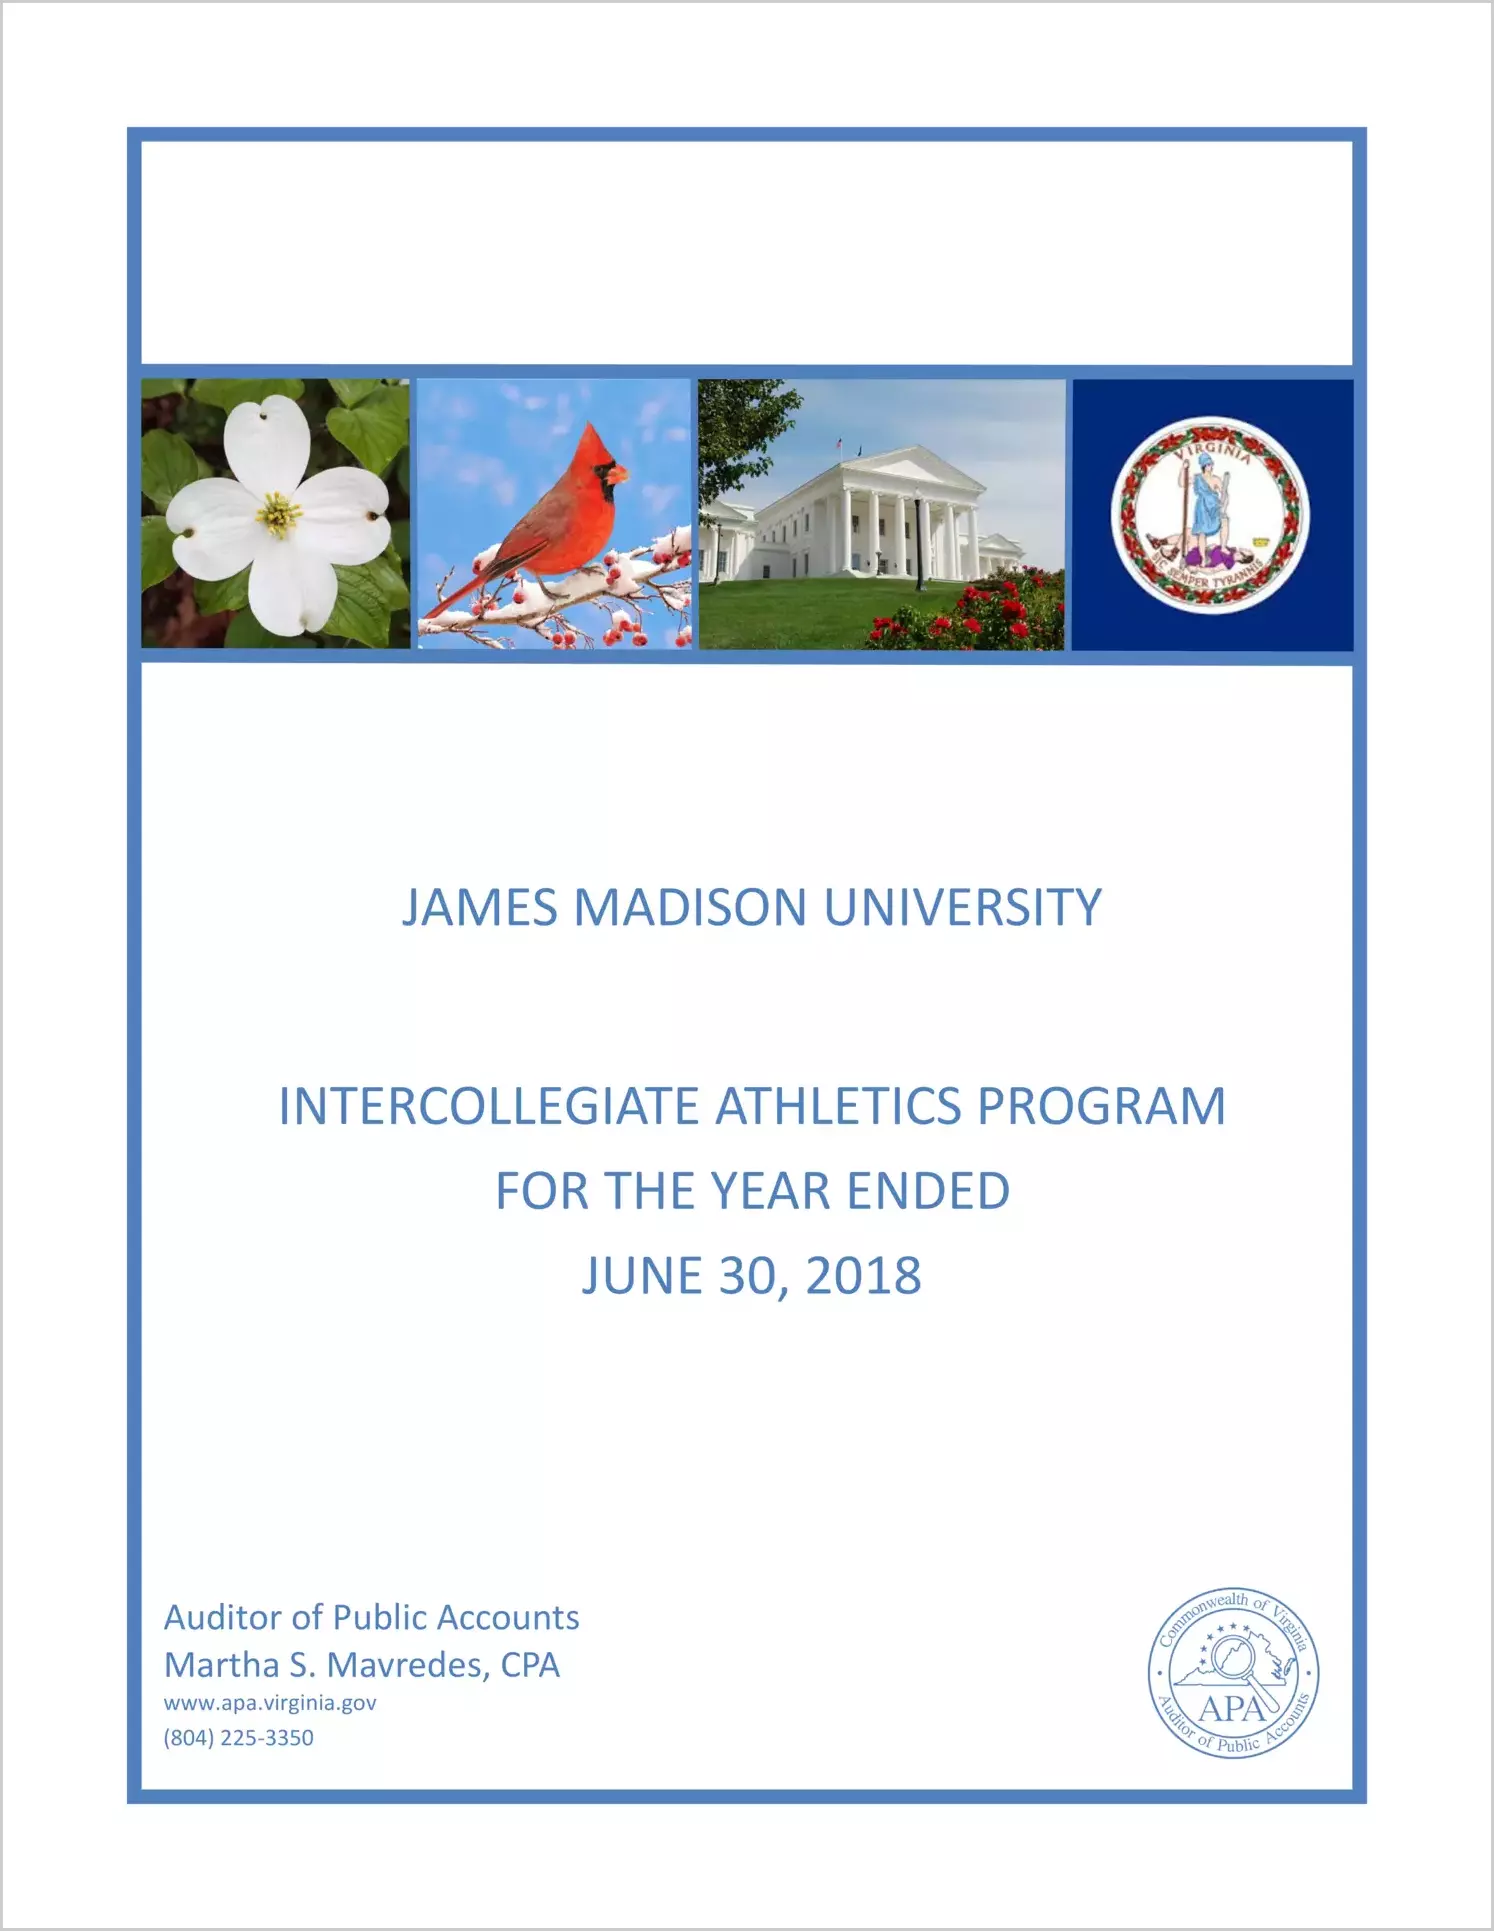 James Madison University Intercollegiate Athletic Programs for the year ended June 30, 2018